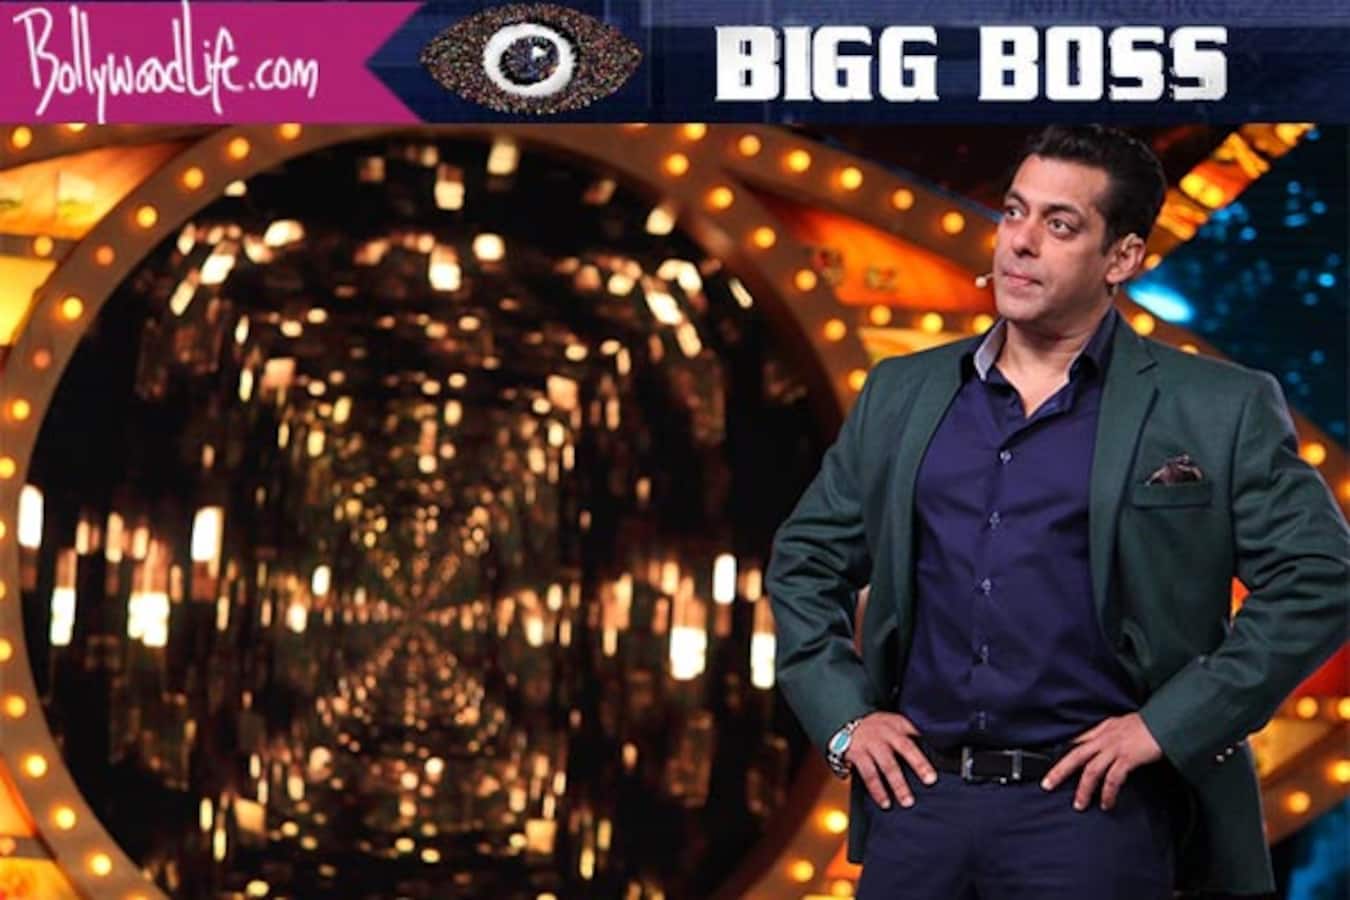 Bigg Boss 10 6th January 2017 Episode 83 Live updates: Salman Khan reprimands Manu Punjabi and rightfully so - Bollywood News & Movie Reviews, Trailers & Videos at Bollywoodlife.com